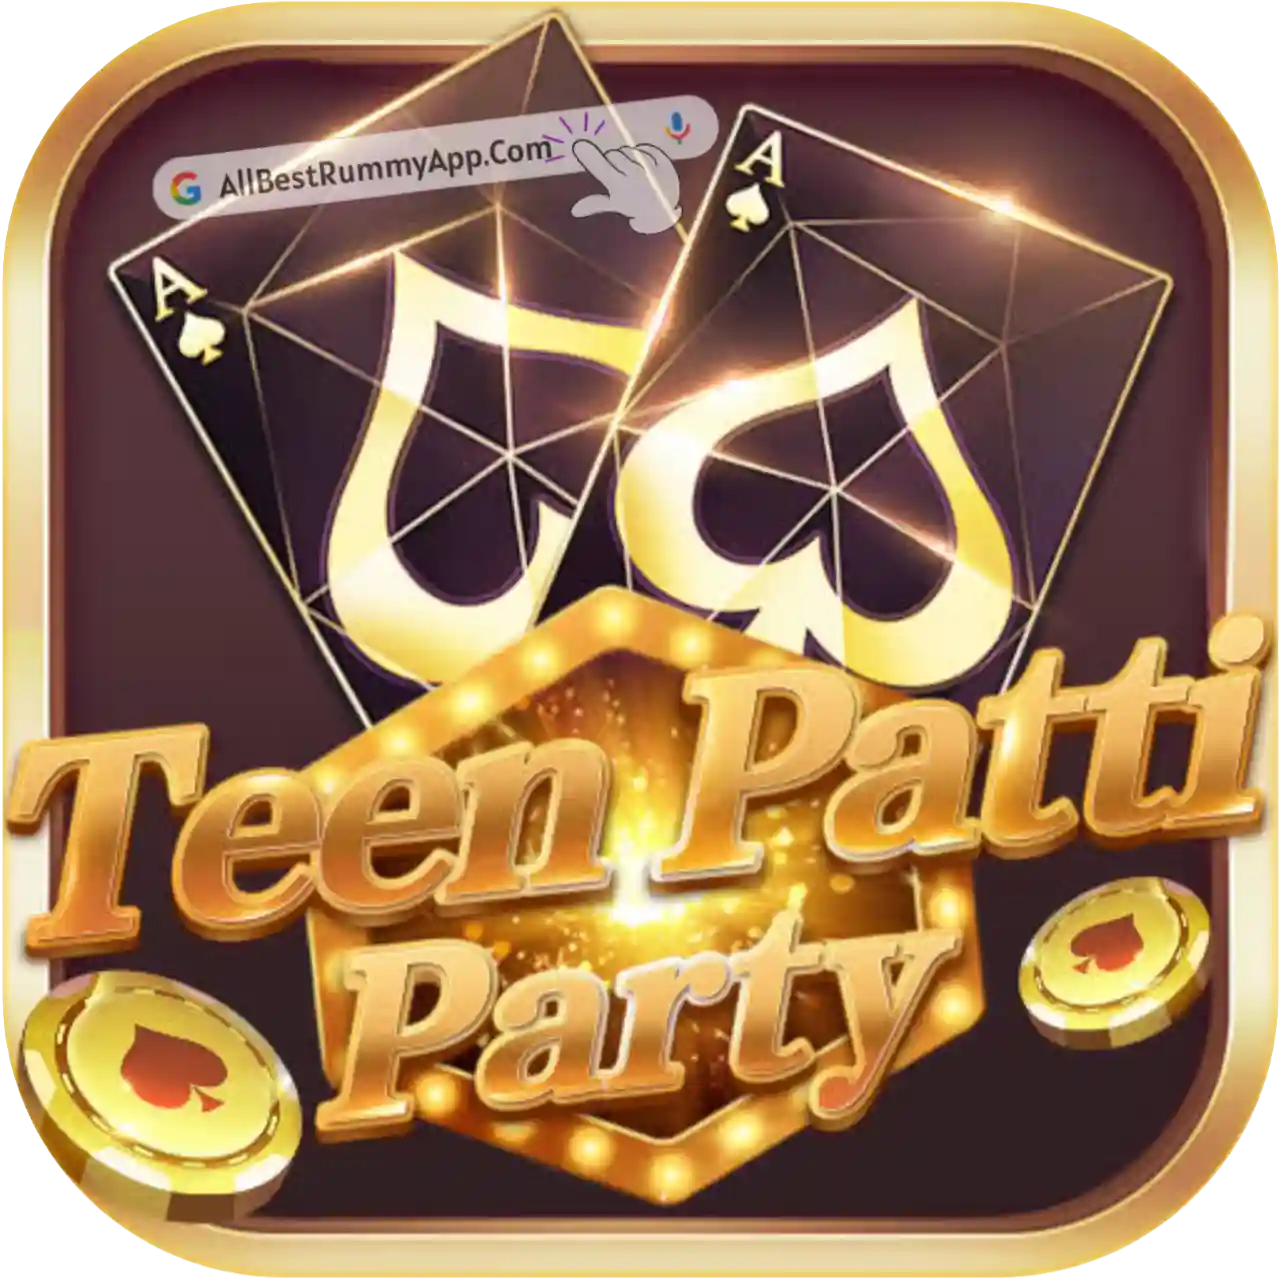 Teen Patti Party - India Rummy APk